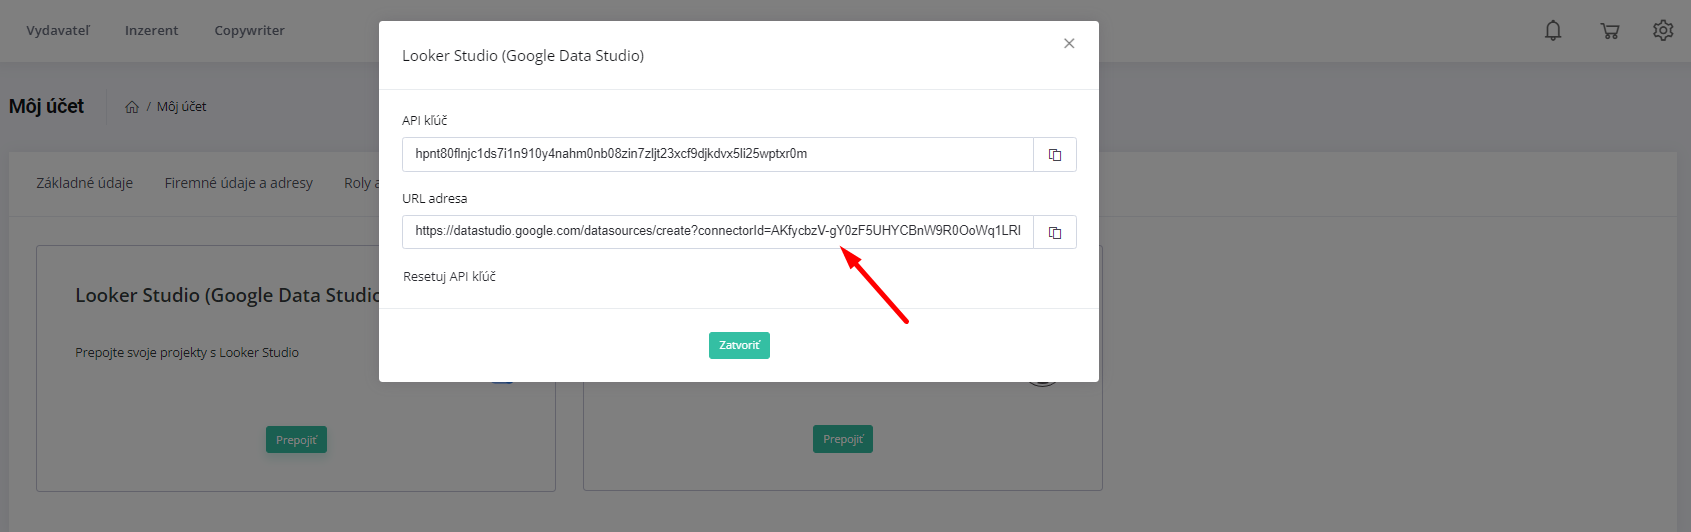 API kľúč a URL adresa na integráciu s Looker Studio